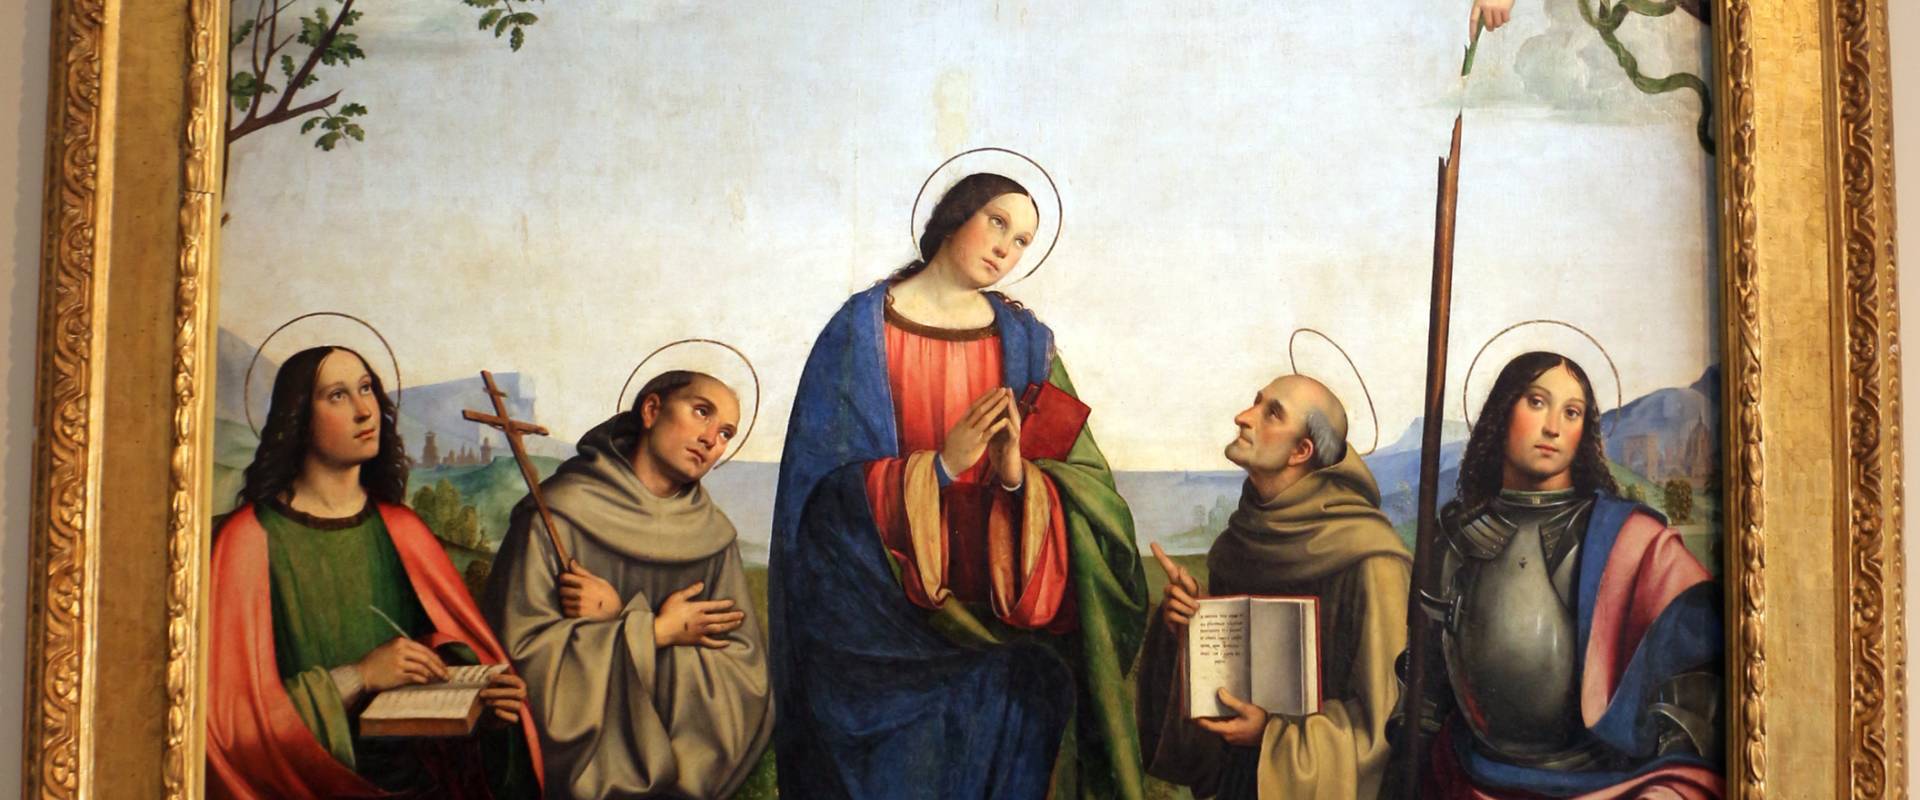 Francesco francia, annunziata tra santi, 1500, dall'annunziata, 01 foto di Sailko